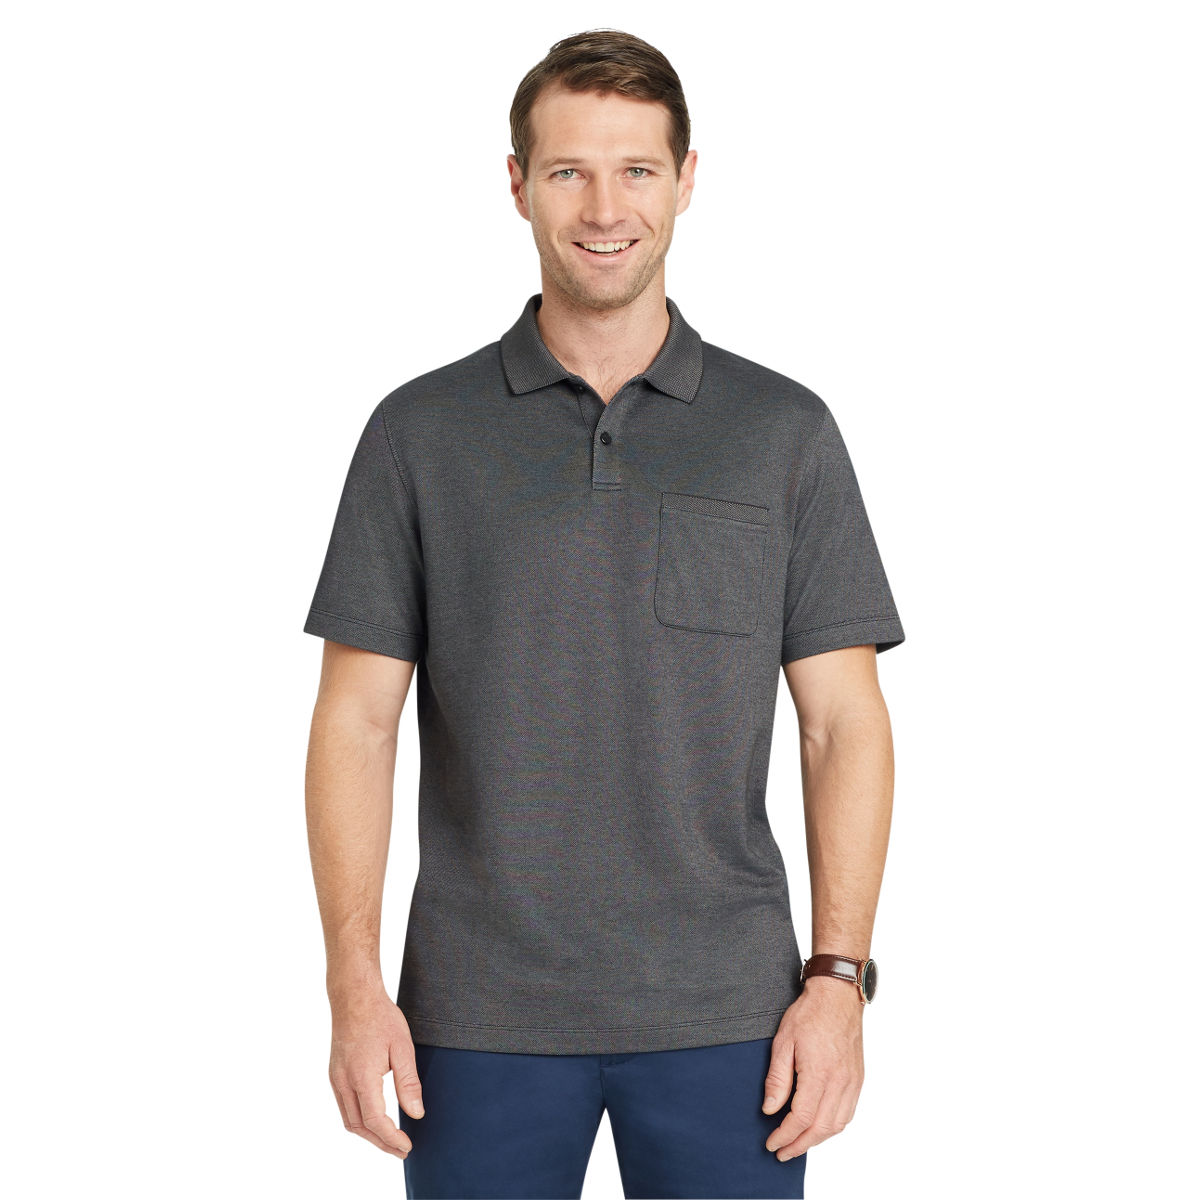 Van Heusen Men's Flex Solid Tip Short-Sleeve Polo Shirt - Black, XXL